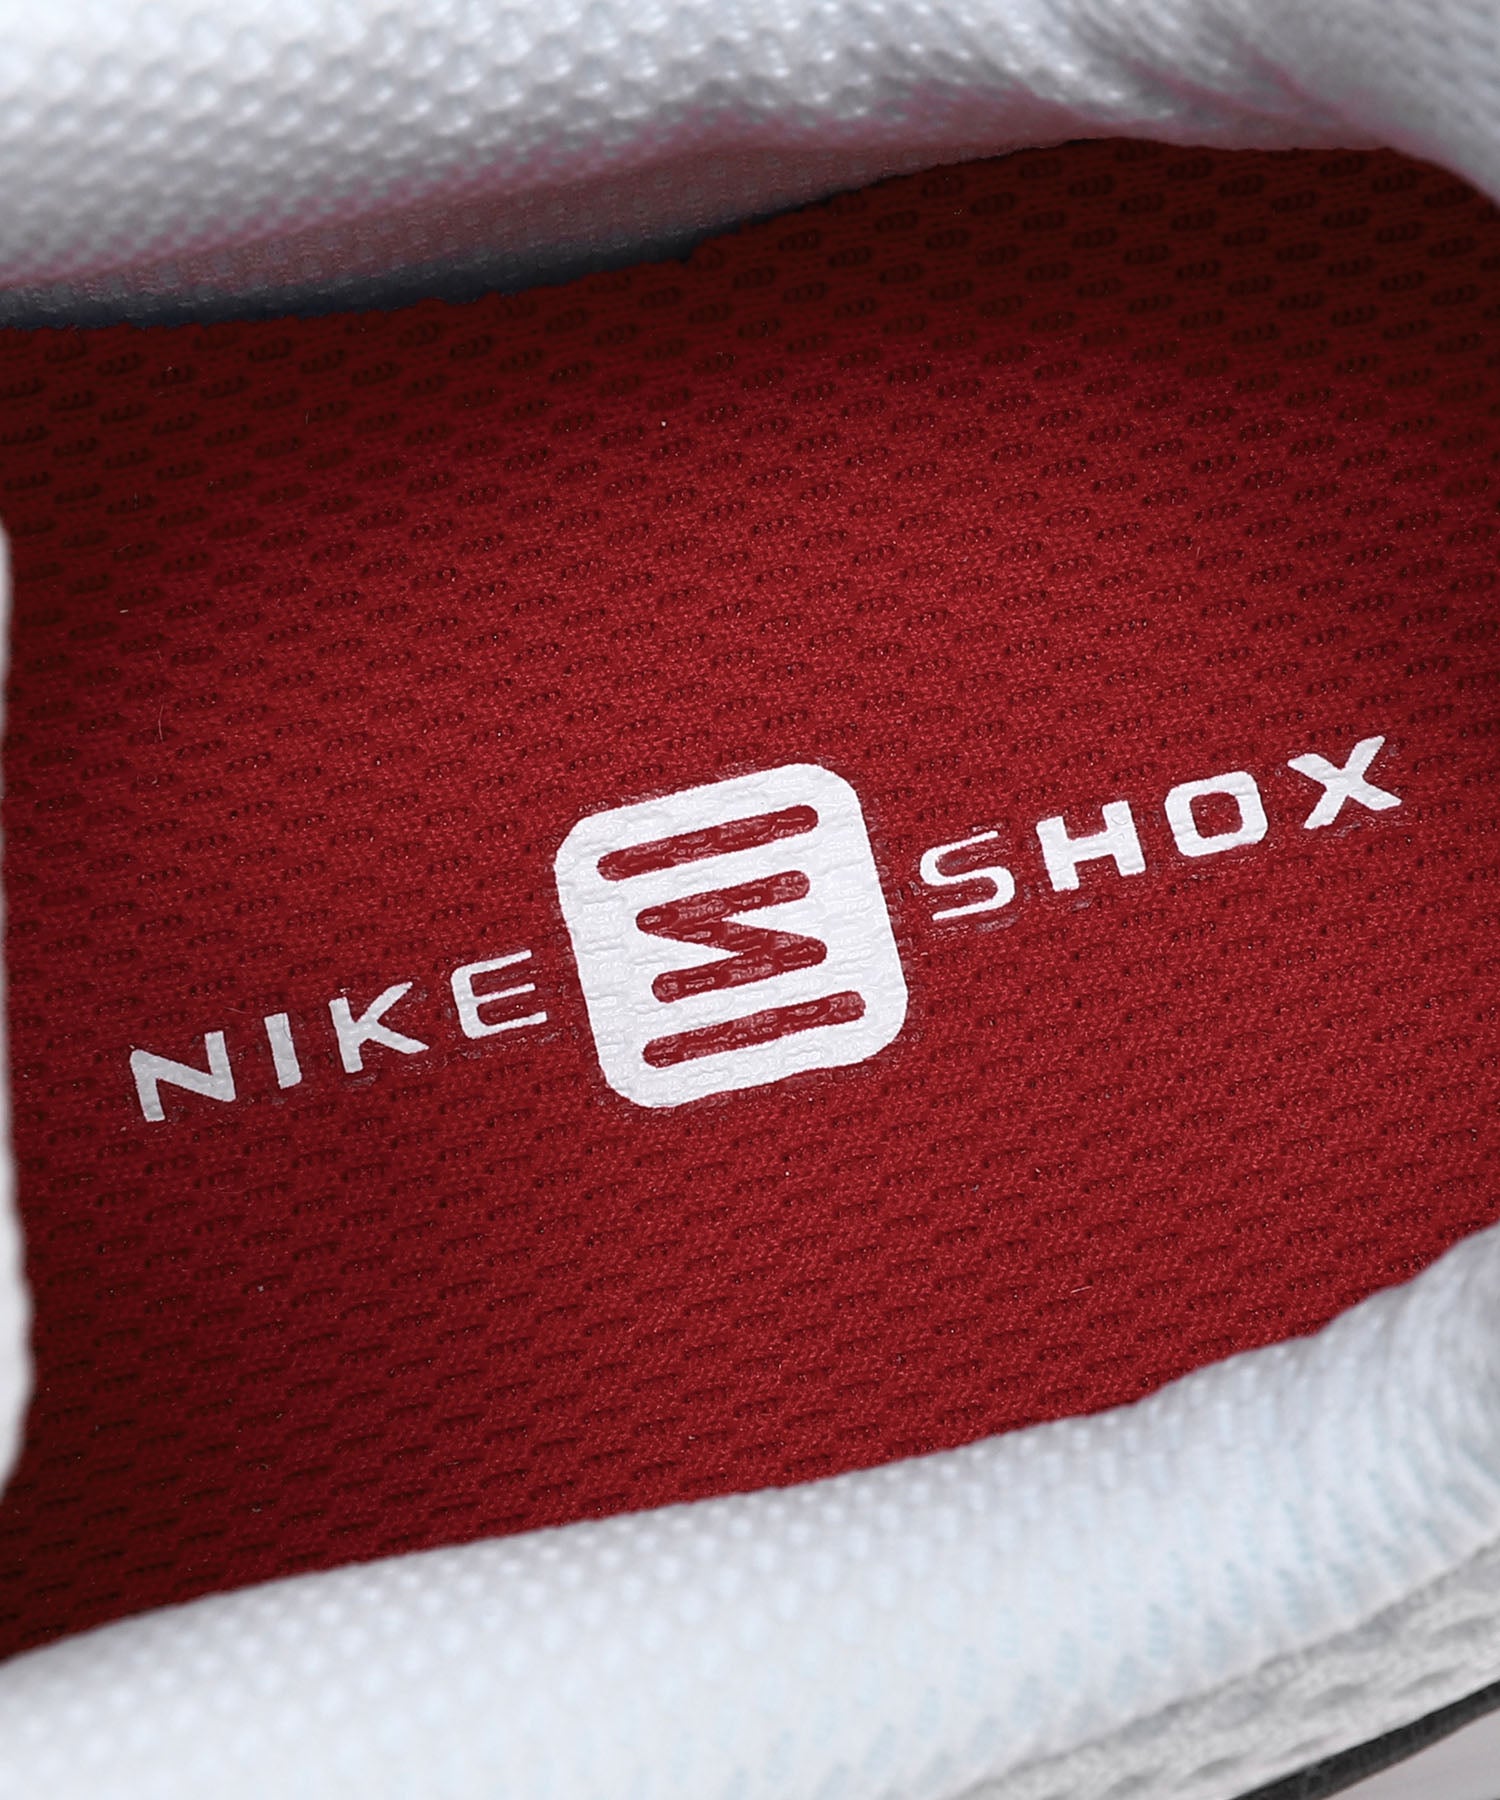 Nike Wmns Shox Tl